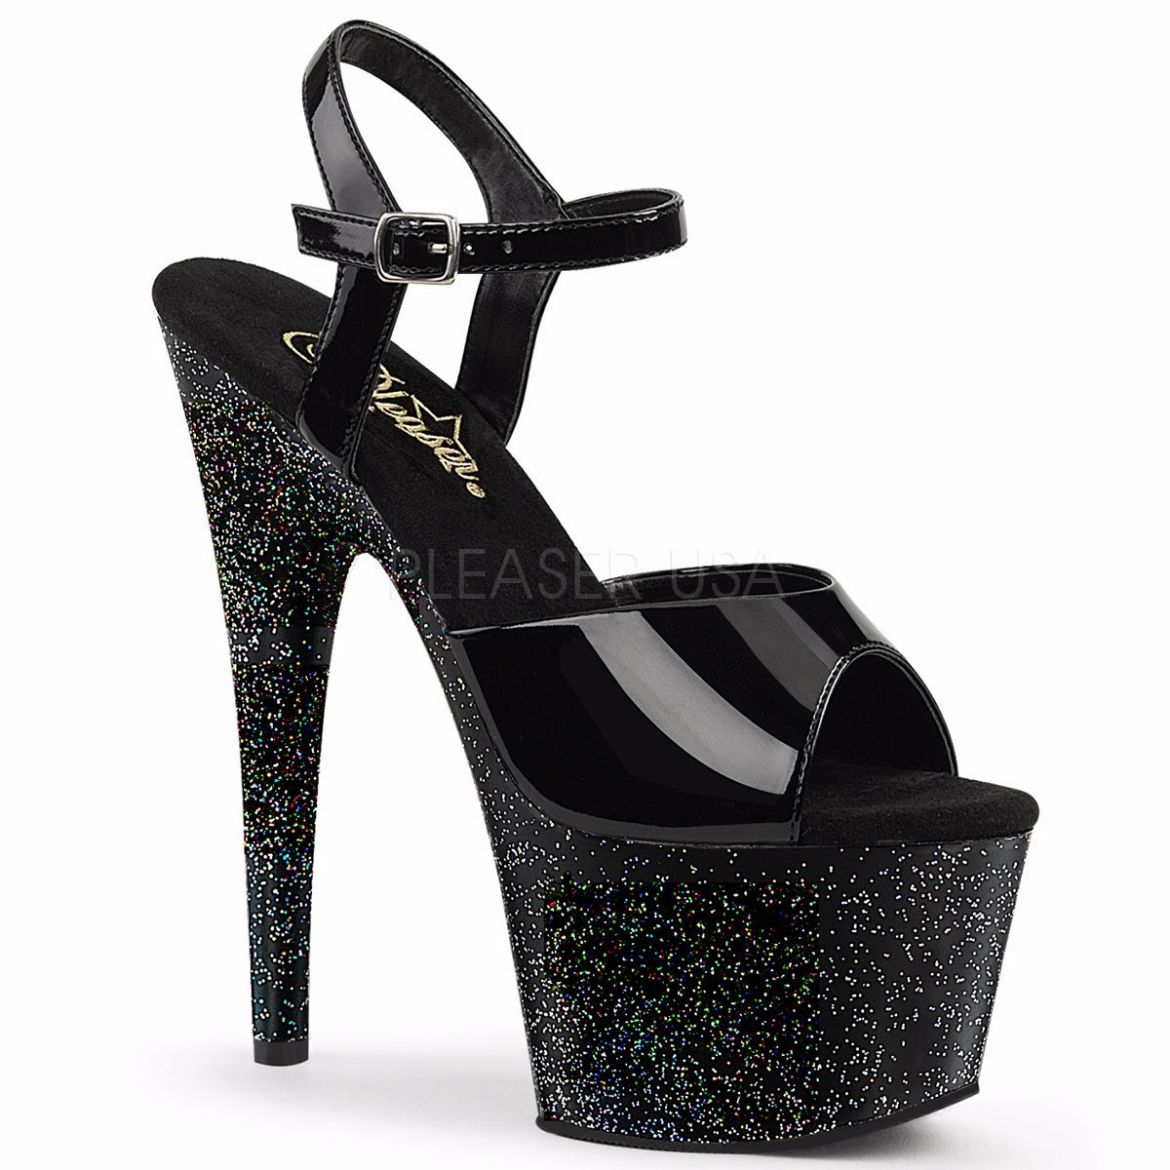 Product image of Pleaser Adore-709Mg Black Patent/Black, 7 inch (17.8 cm) Heel, 2 3/4 inch (7 cm) Platform Sandal Shoes